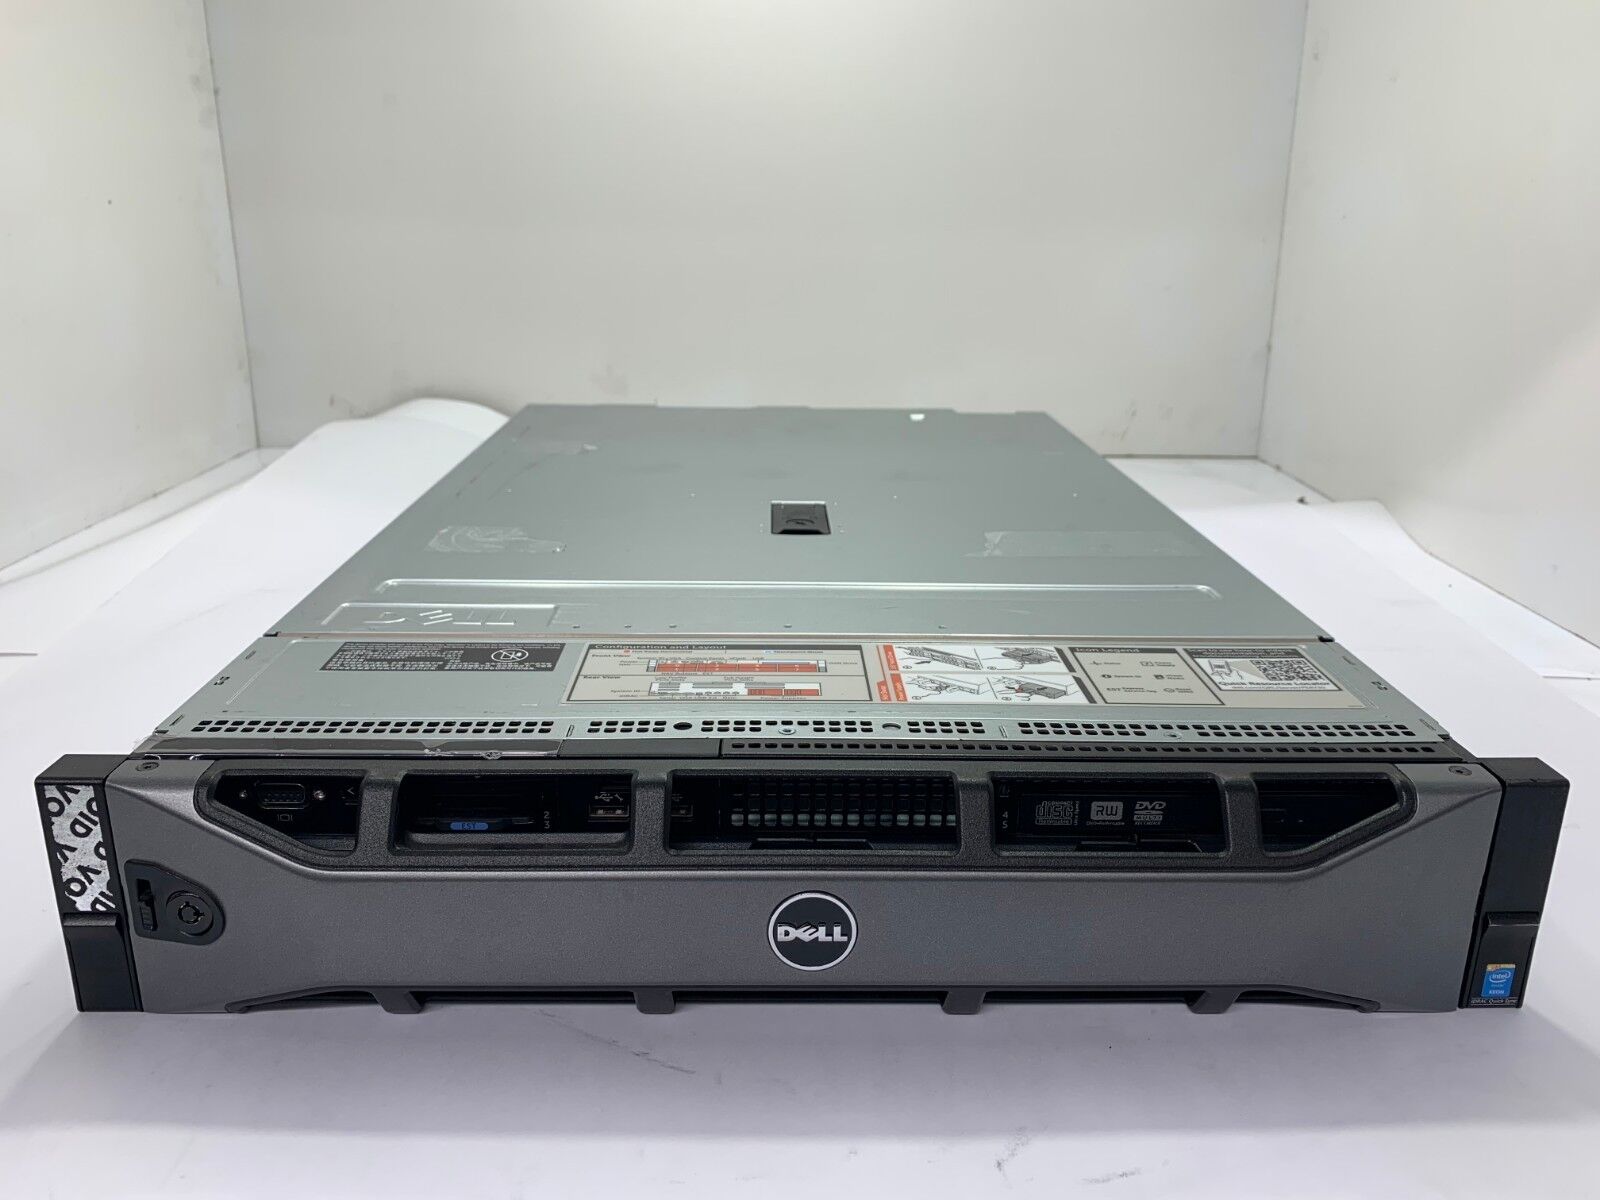 Dell PowerEdge R730 Dual Xeon E5-2630v3 2.4Ghz 8-Core, 128GB MEM Rack Server